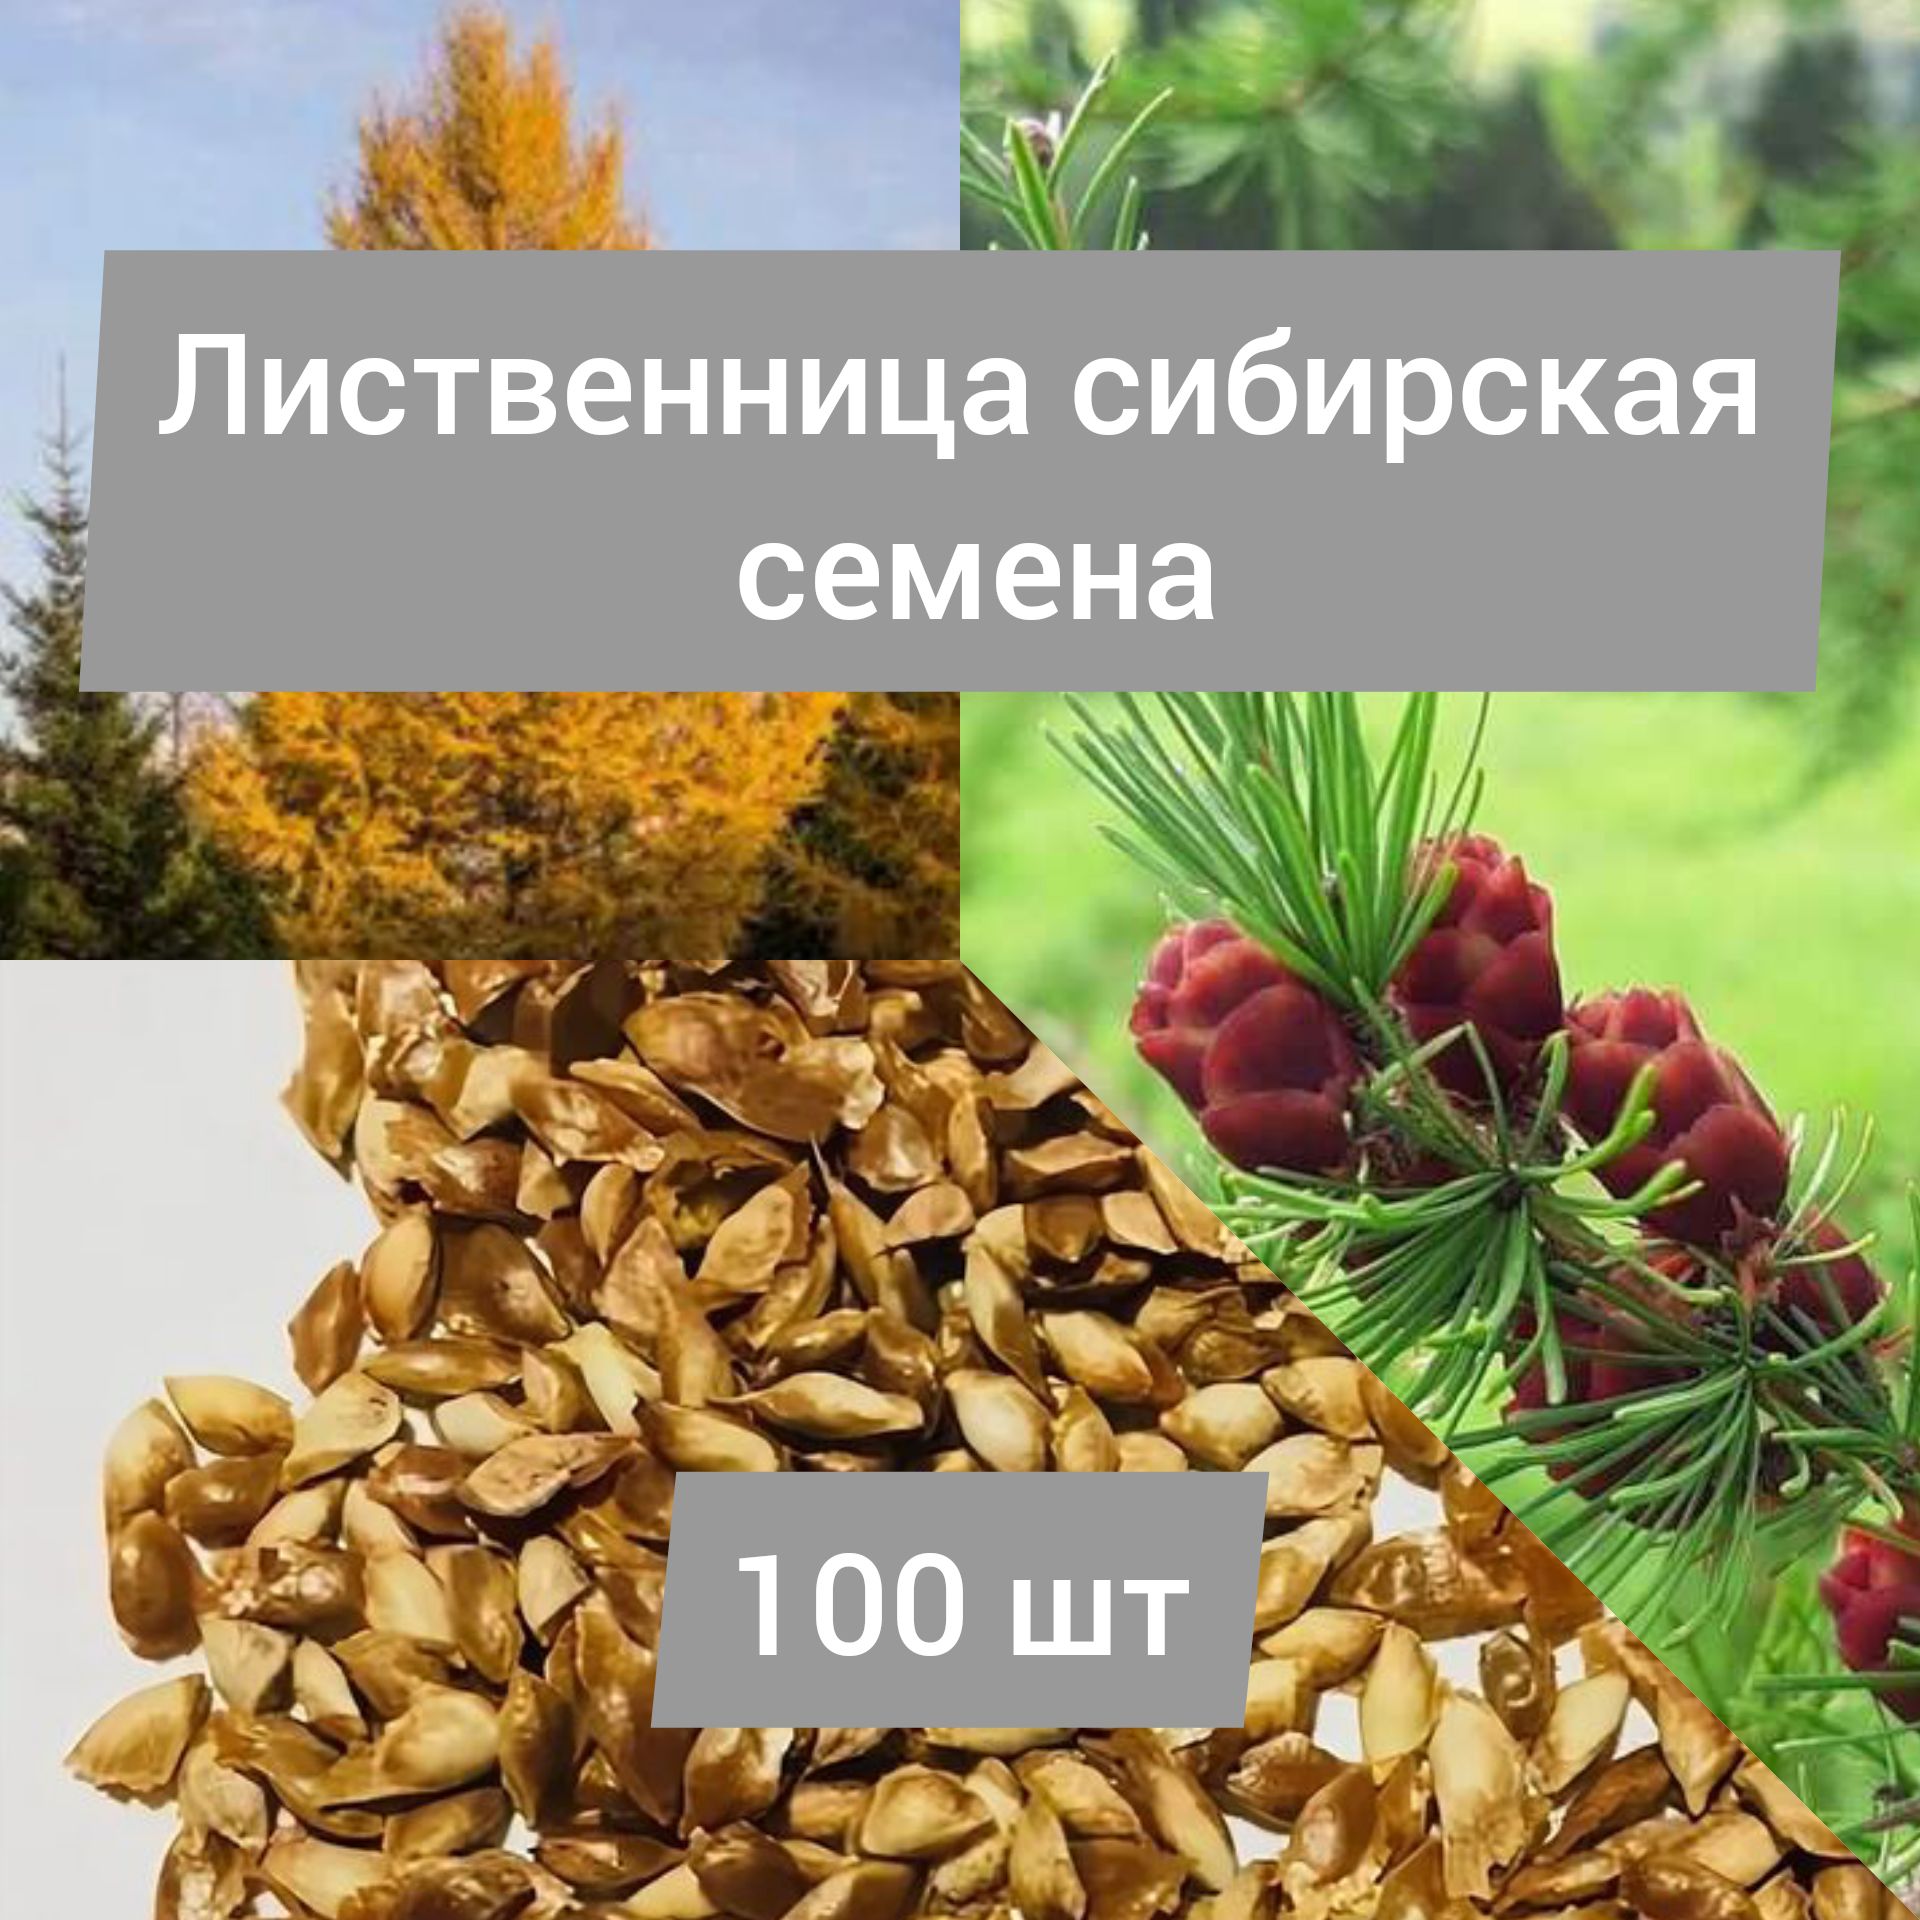 Лиственницасибирскаясемена-100ШТ